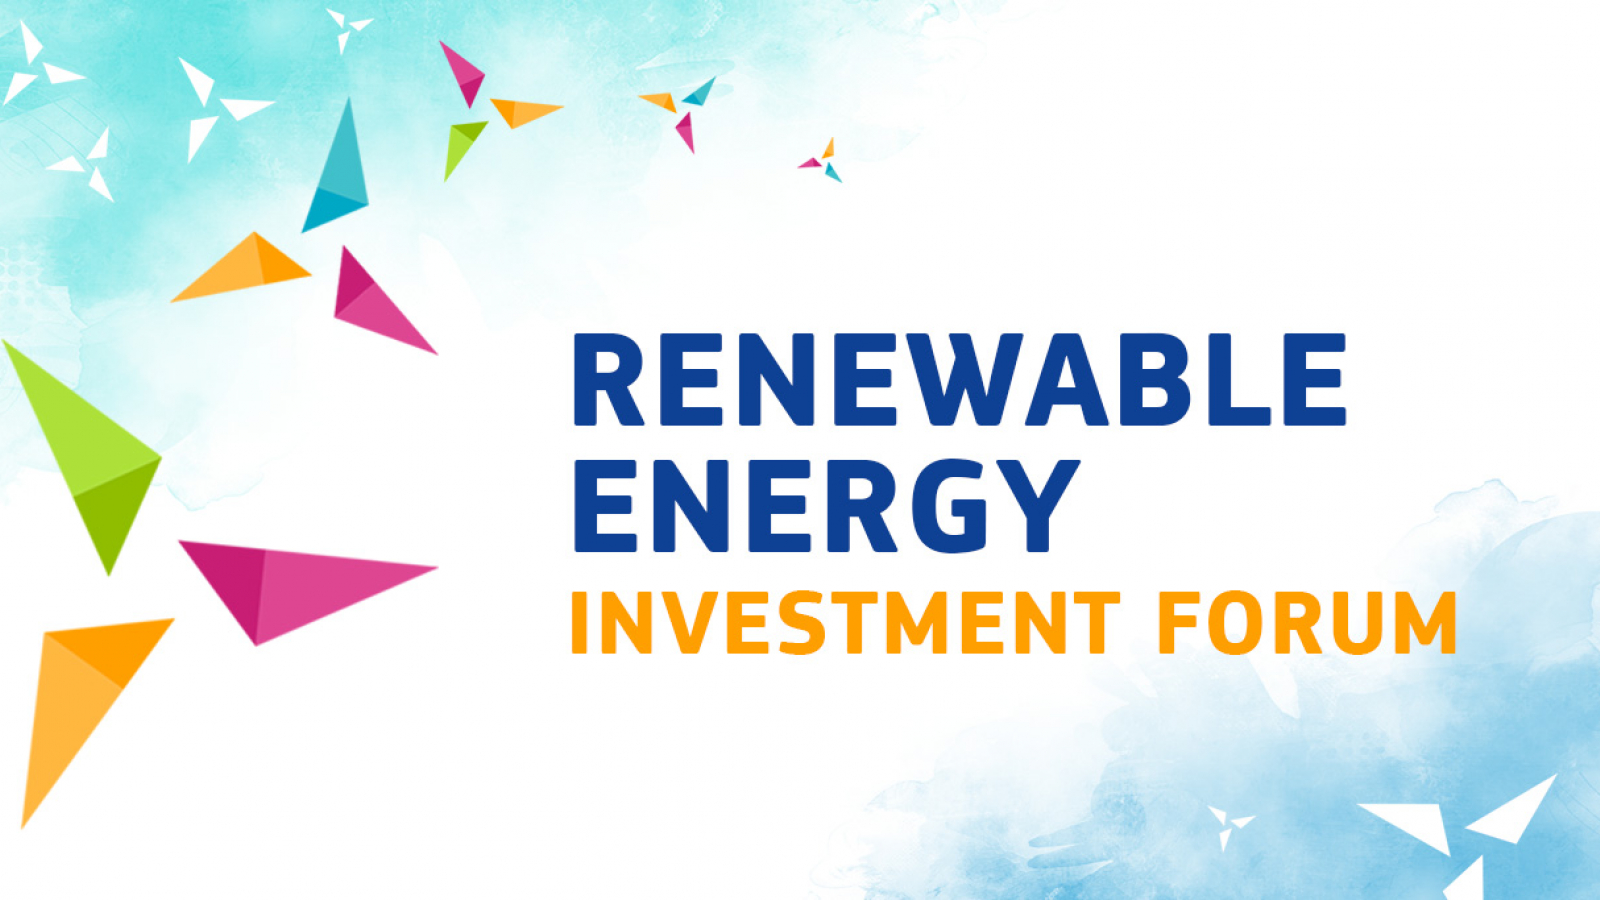 Registration open for EU-Ukraine Renewable Energy Investment Forum in Kyiv